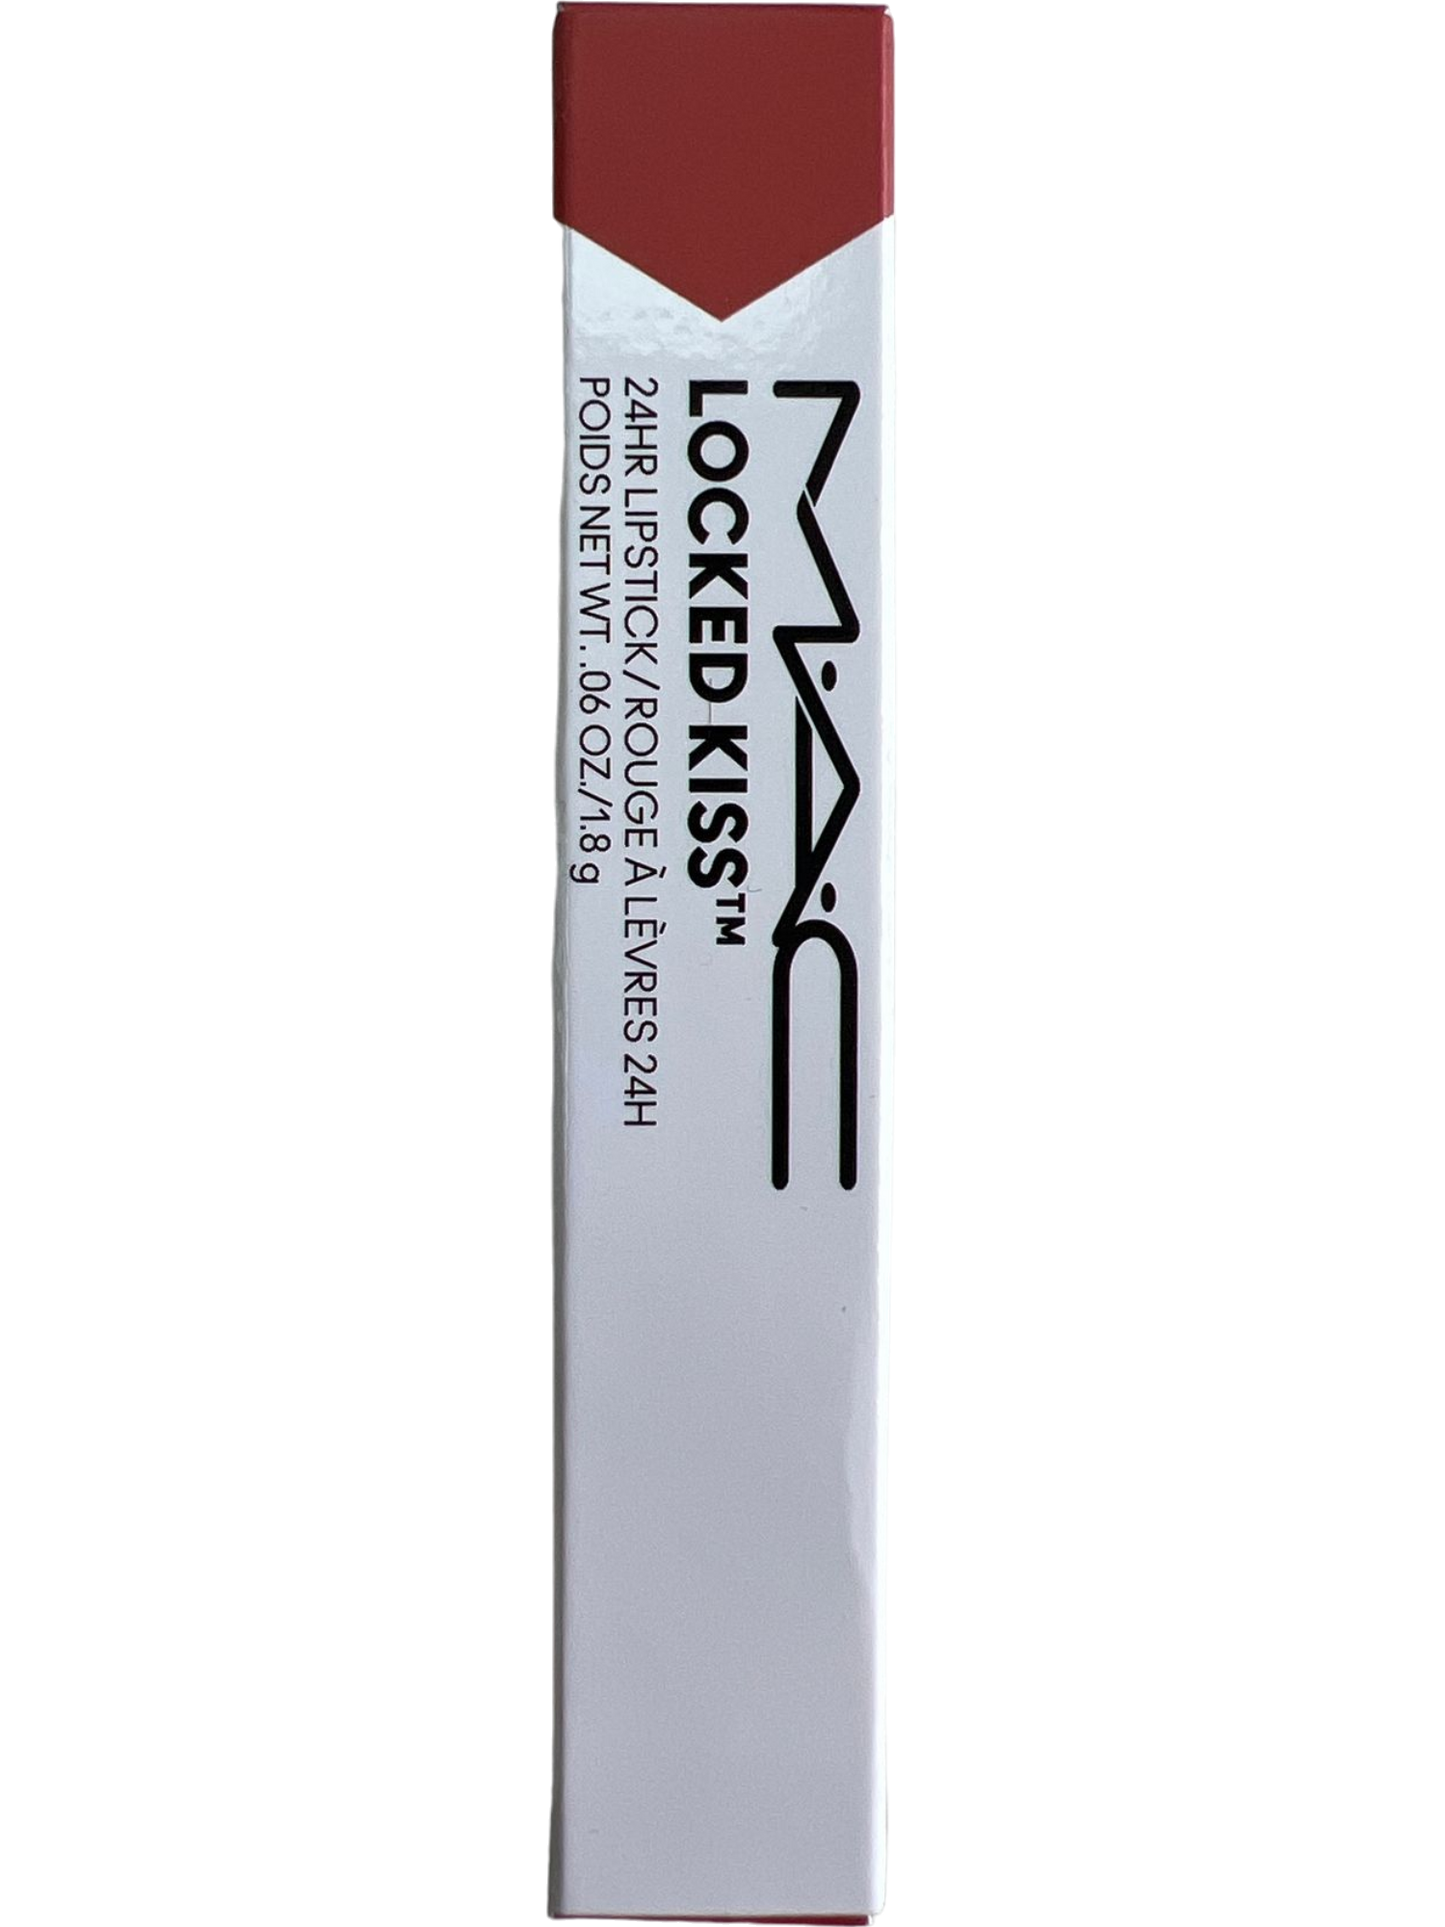 MAC Cosmetics Mischief Locked Kiss 24h Lipstick Ultra Matt Long-lasting